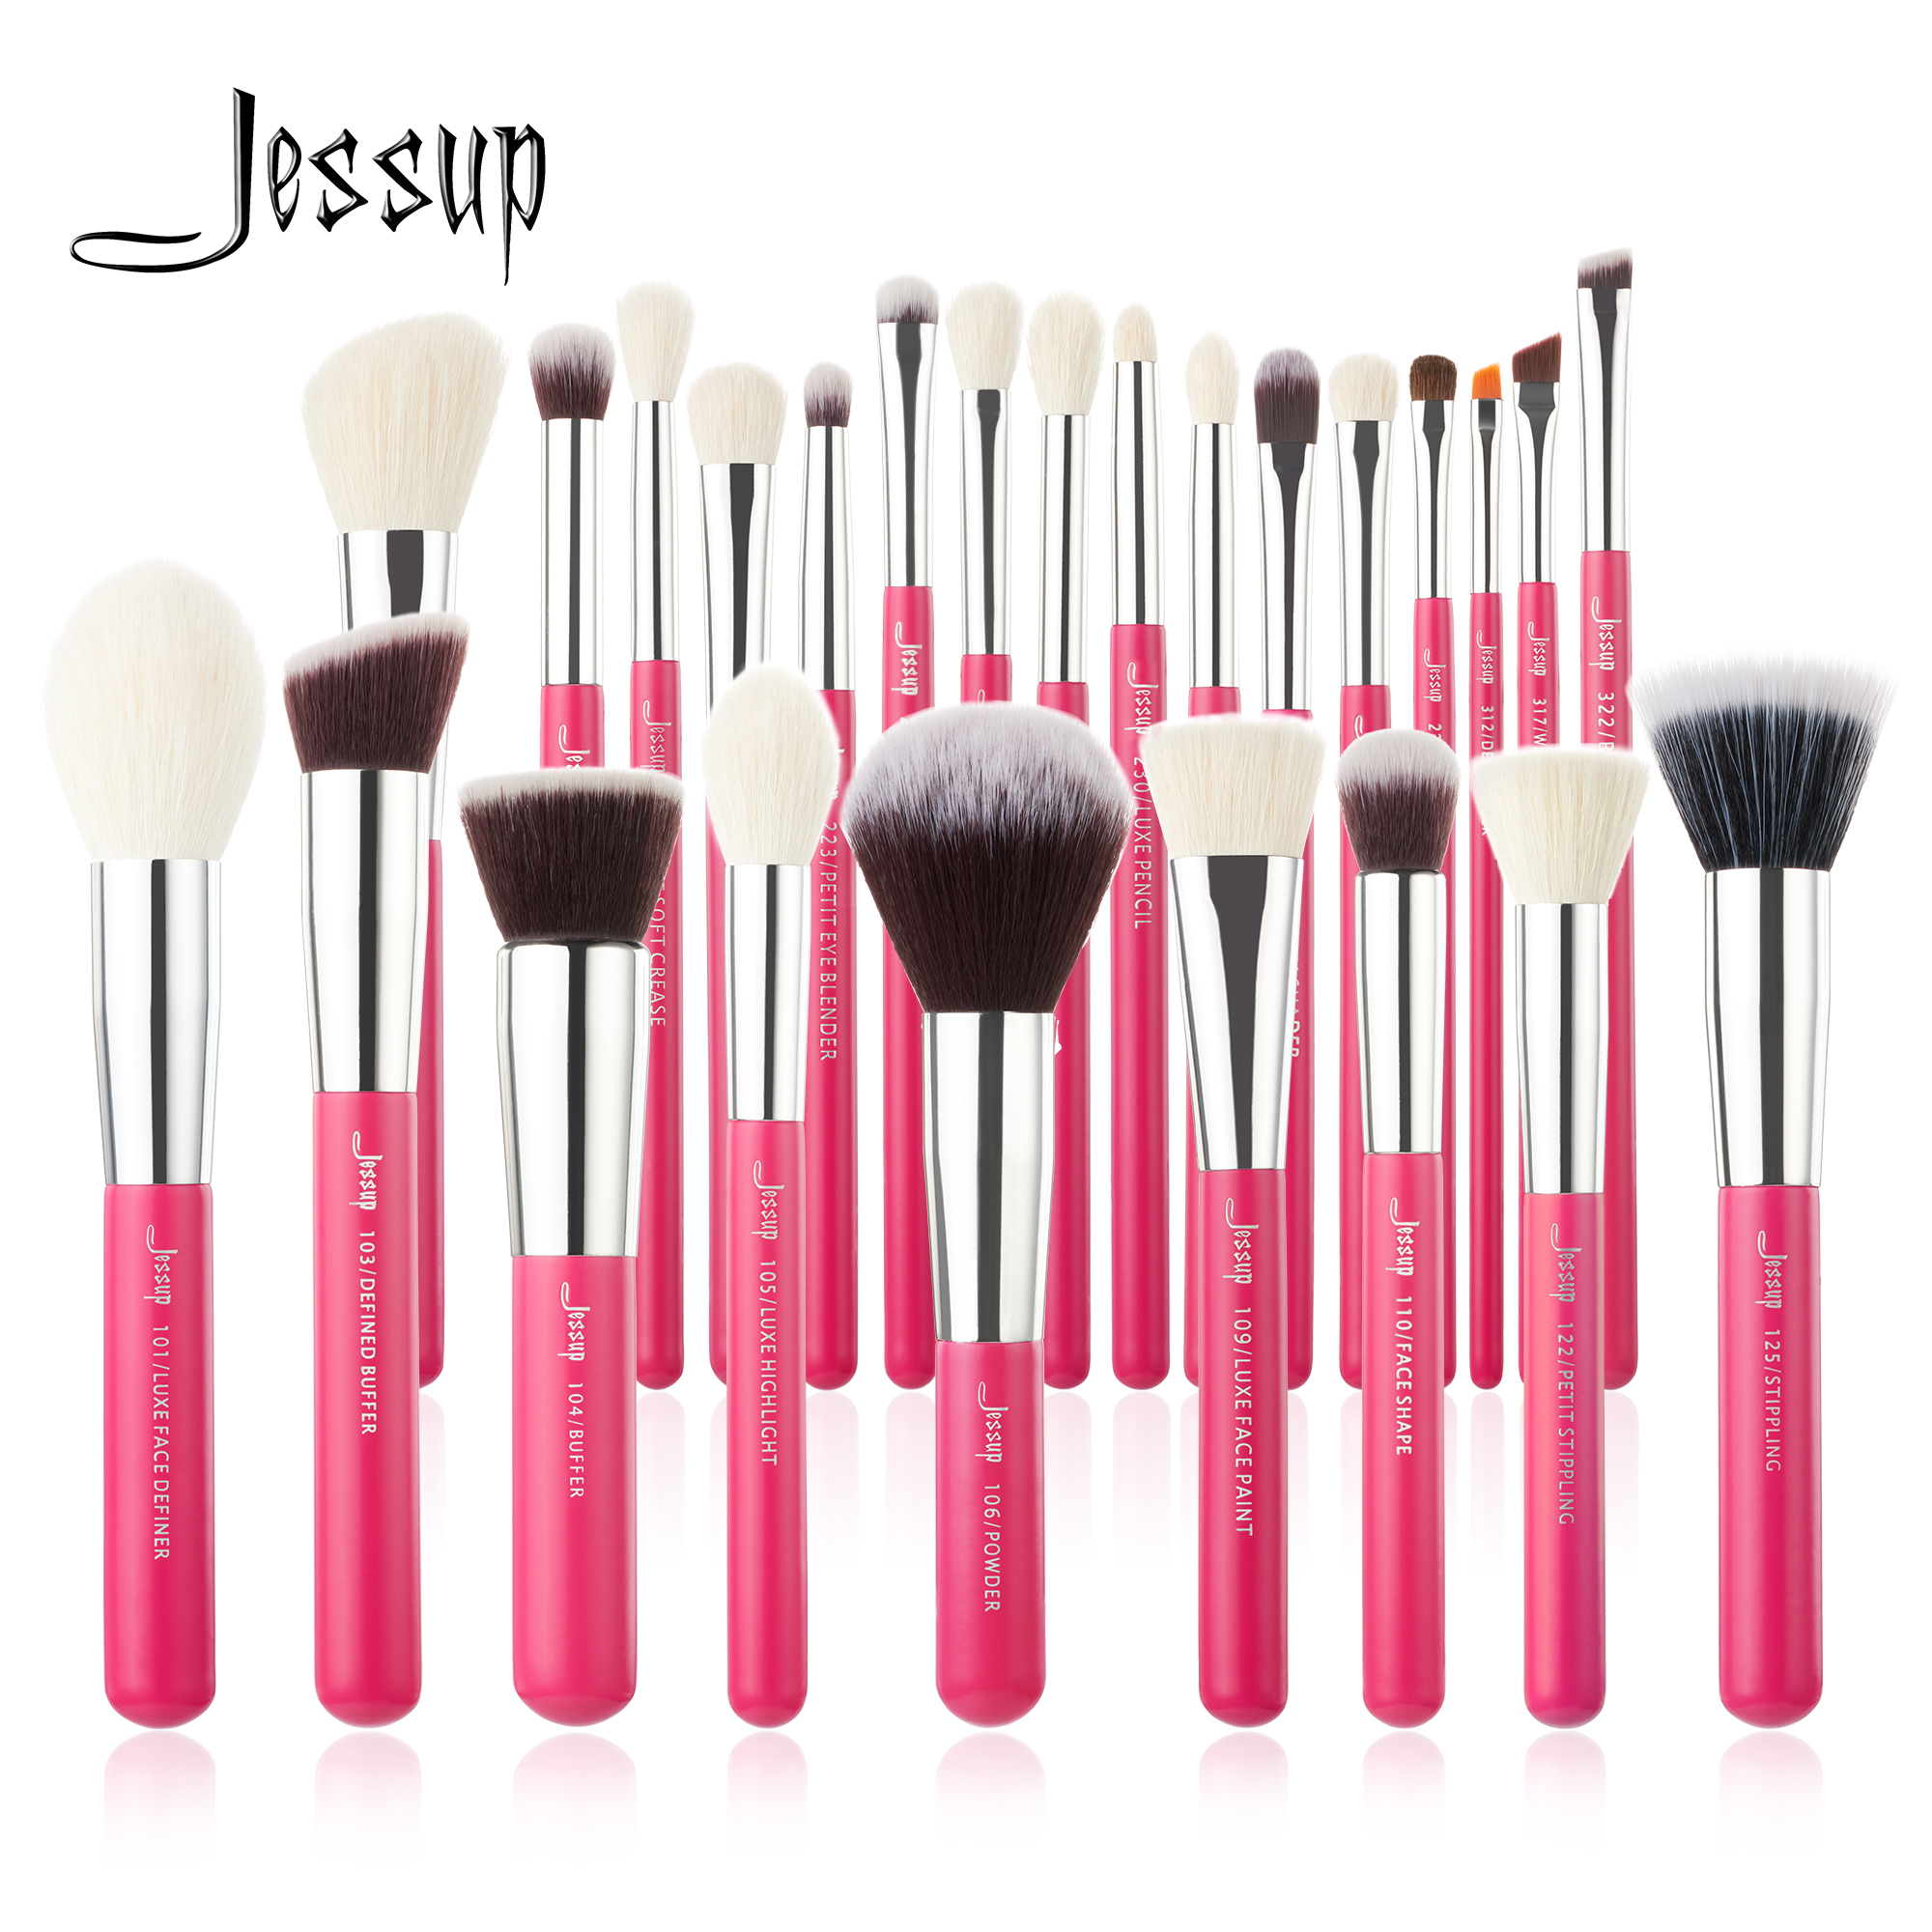 Jessup Rose-Carmin/Zilveren Make-Up Kwasten Set Beauty Foundation Powder Oogschaduw Make Up Brush 6Pcs-25pcs Natuurlijke-Synthetisch Haar